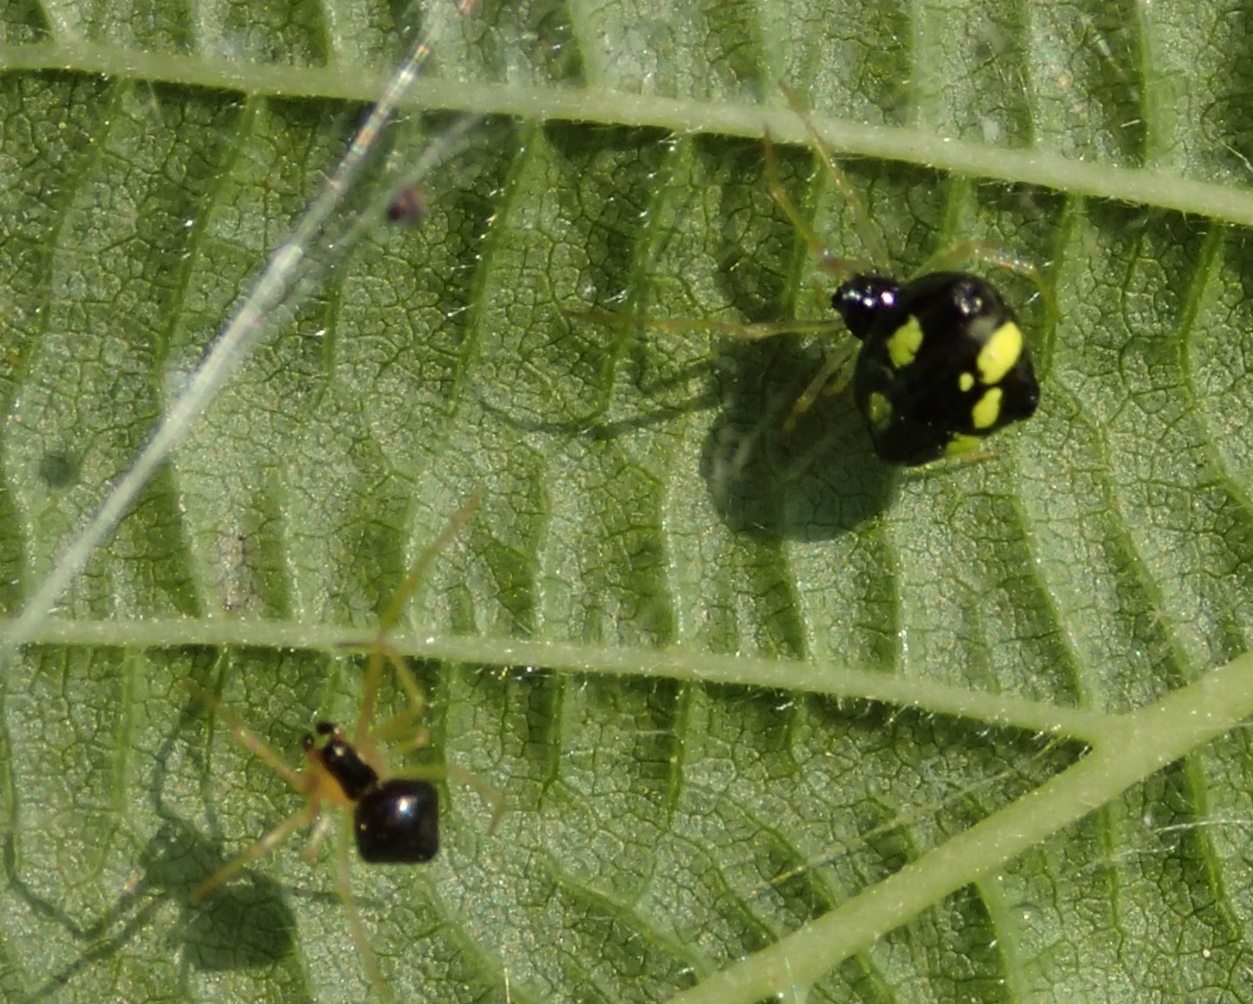 Theridula gonygaster maschio e femmina - Lughignano (TV)